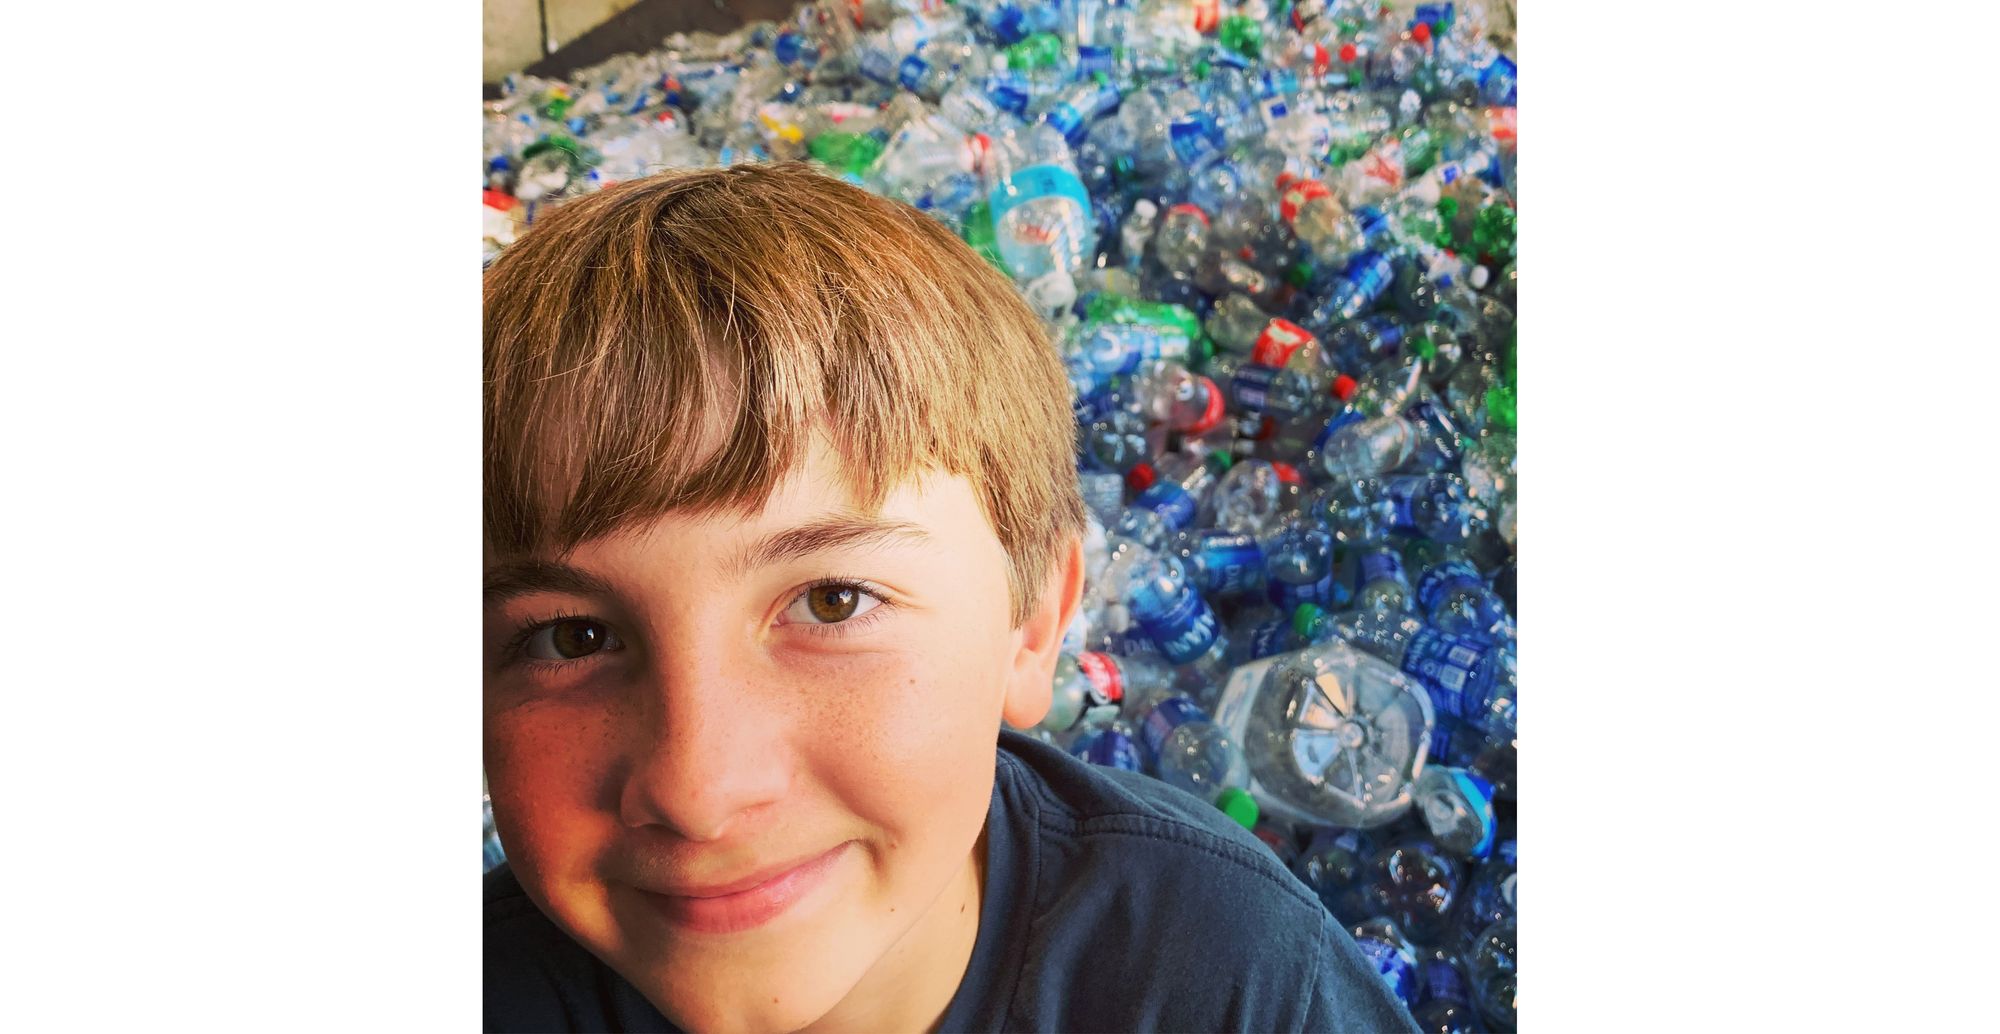 Saving the Planet Through Recycling - Ryan Hickman